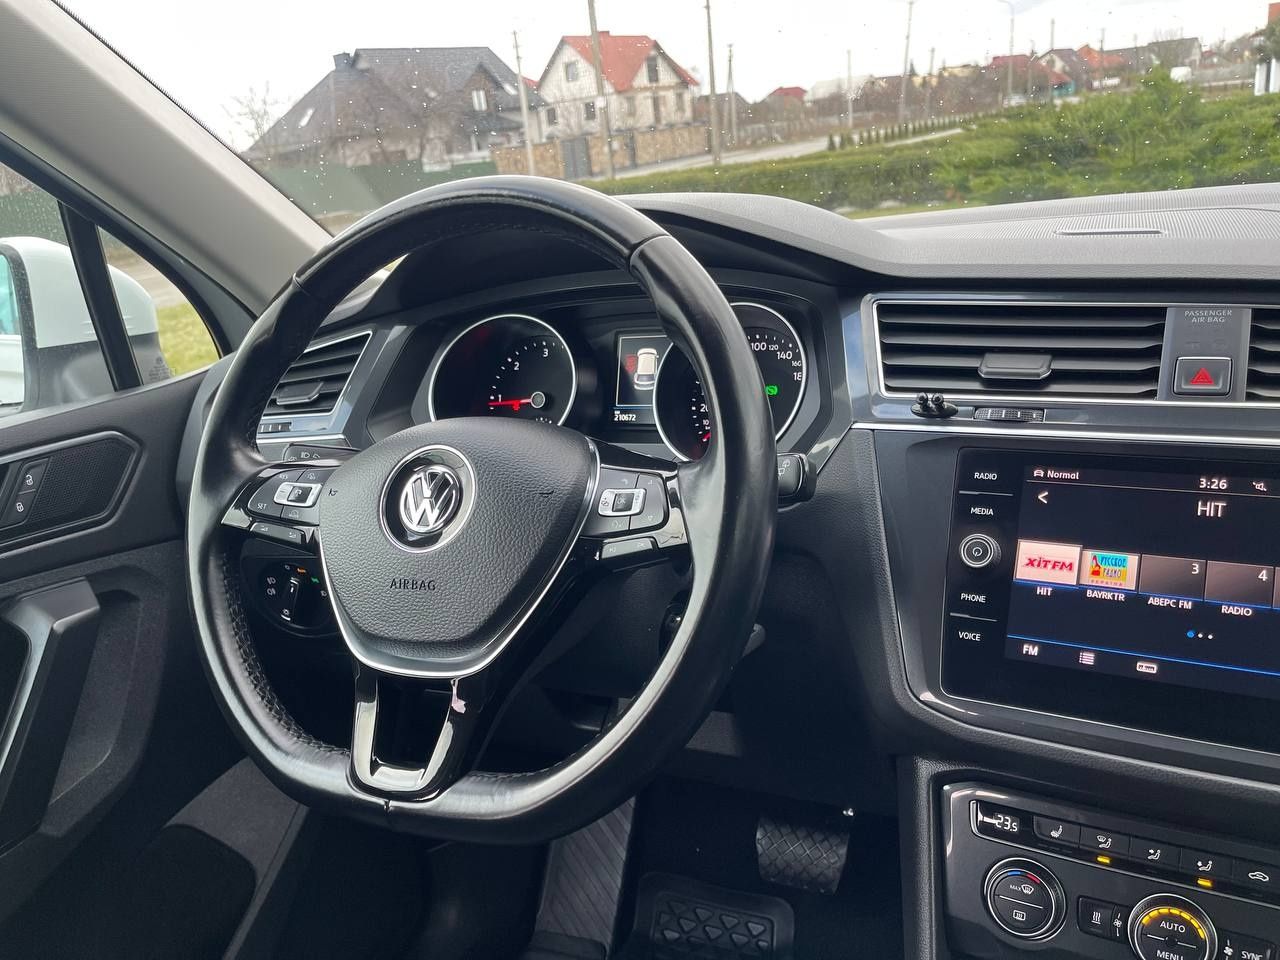 VW Tiguan 2017. 2.0 TDI 4x4